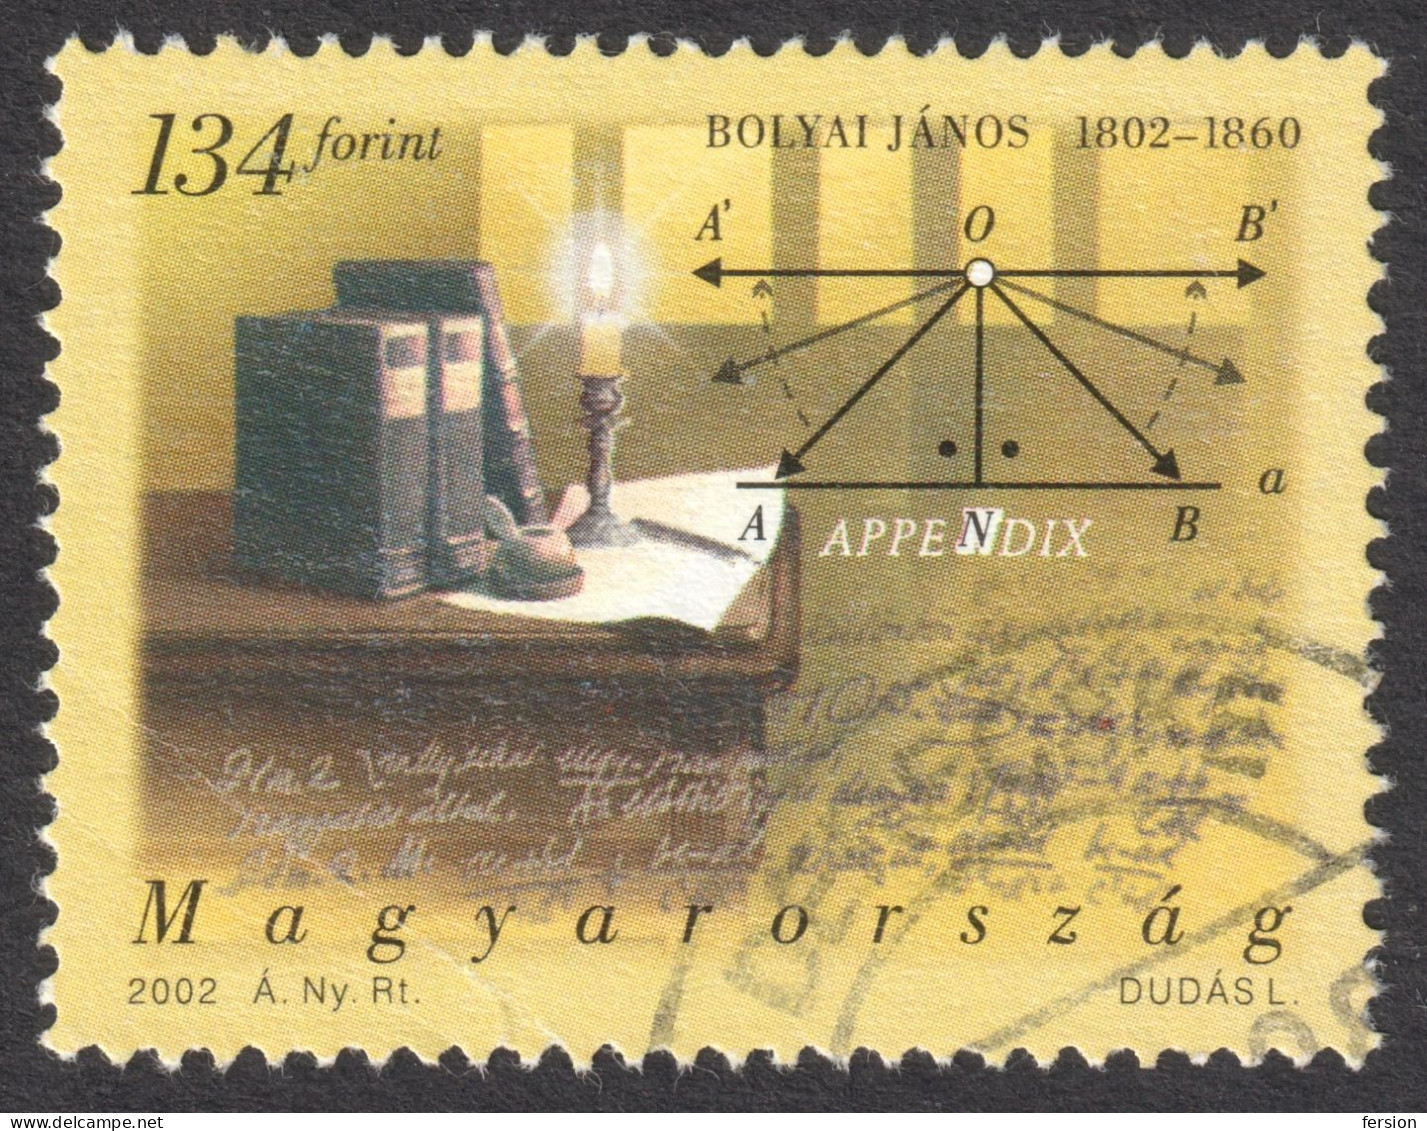 Janos Bolyai - Hungarian Mathematician / Mathematics - Hungary 2002 - Used / Candle Book Ink Pen - Postmark DERECSKE - Used Stamps